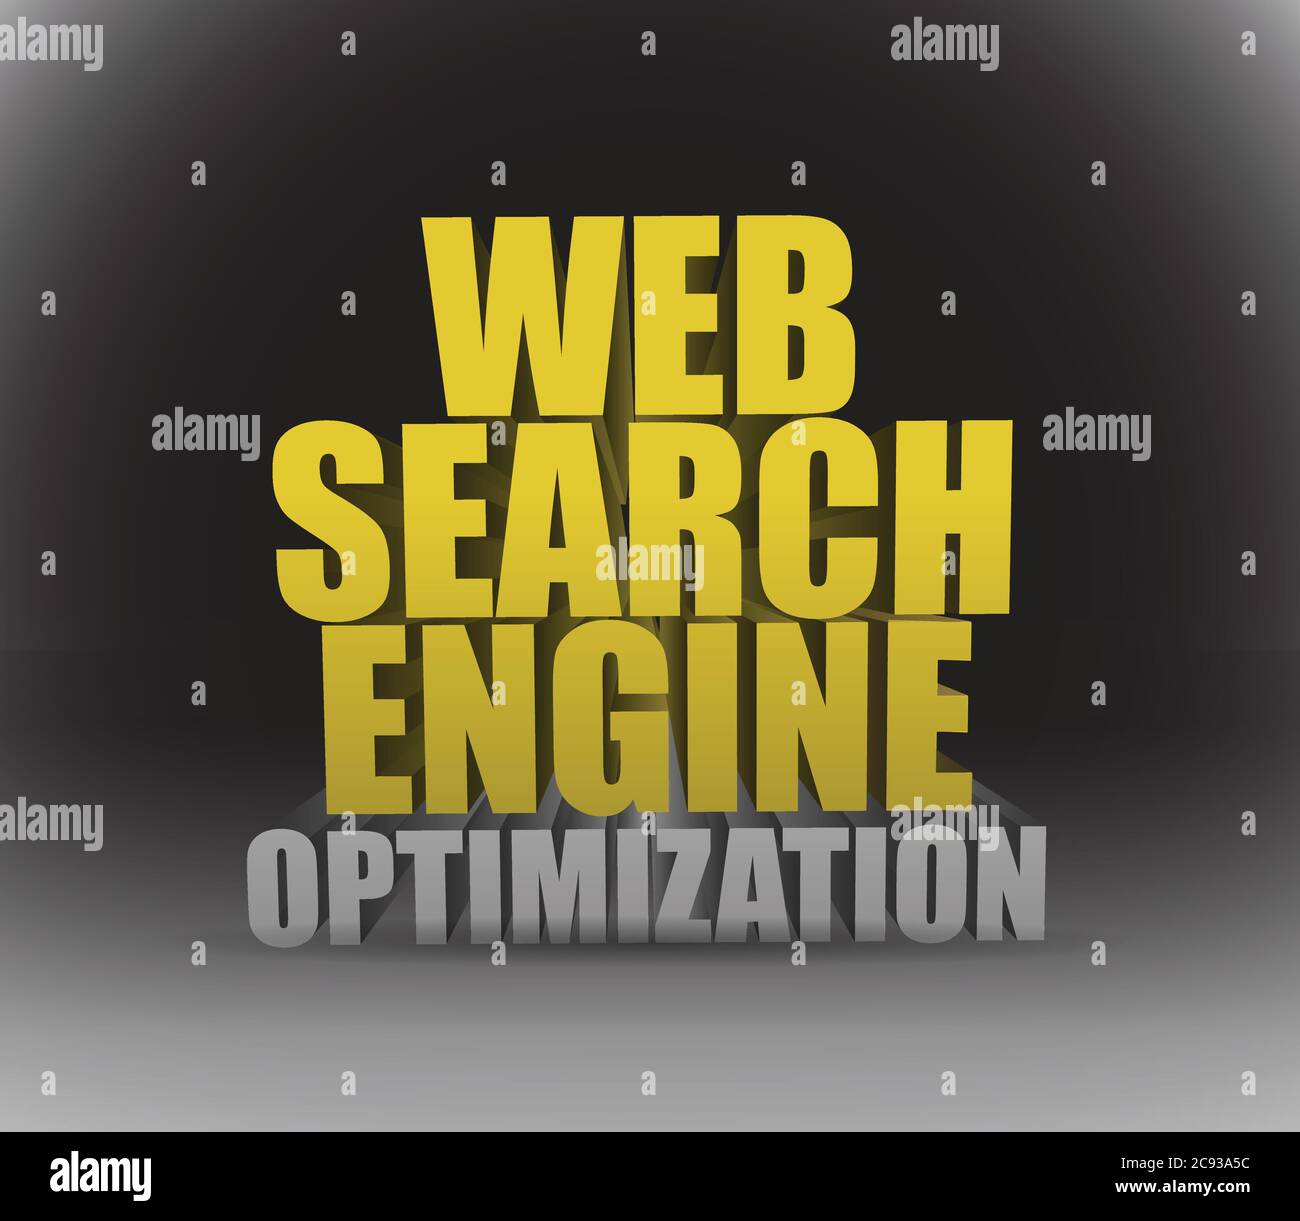 Web search engine optimization sign illustration design over a black background Stock Vector